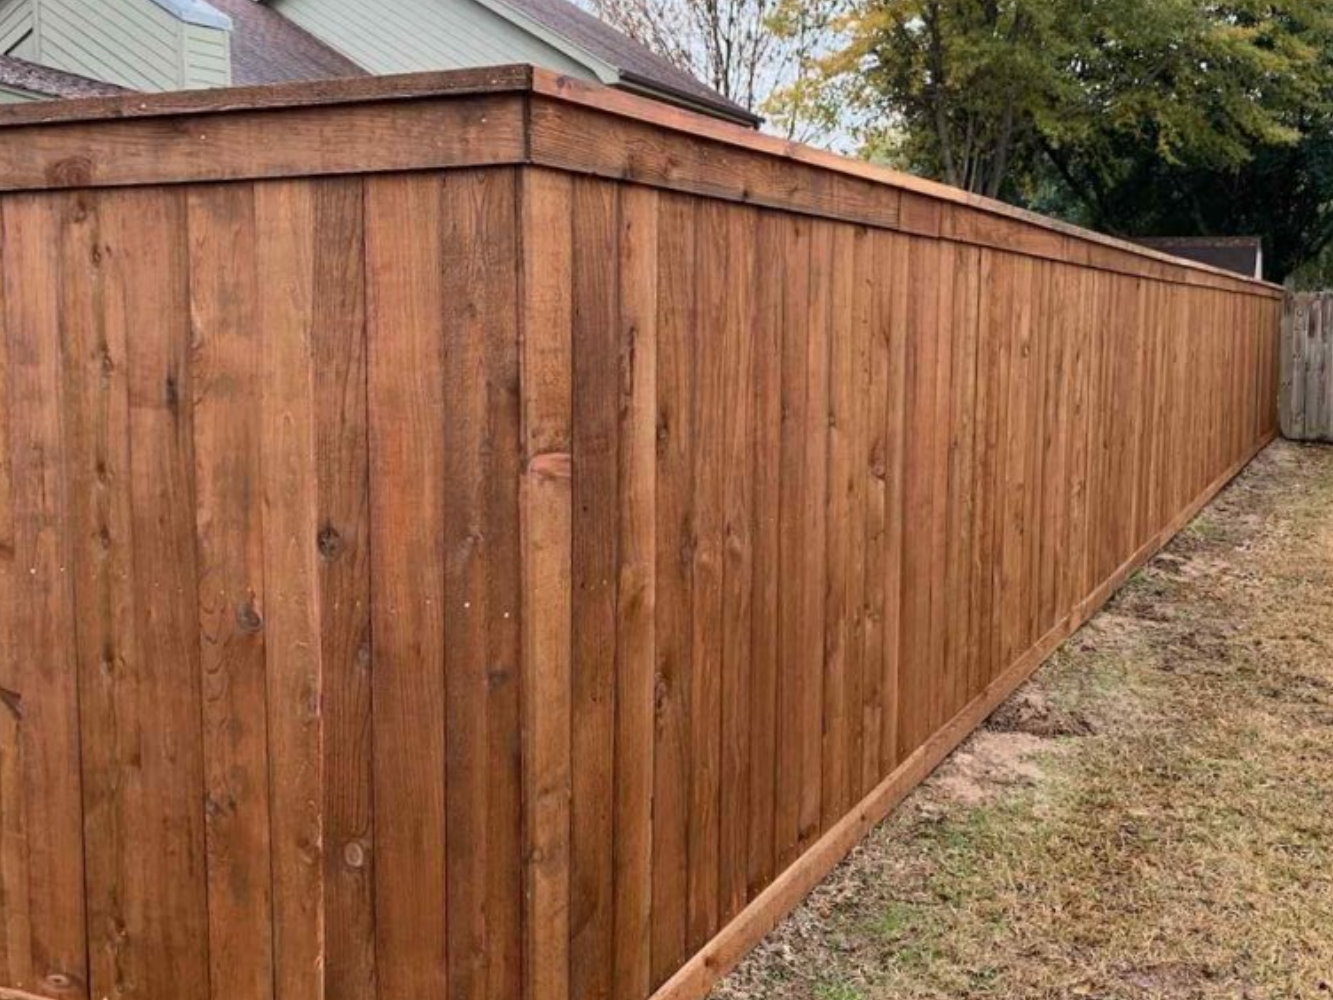 Atlanta TX cap and trim style wood fence